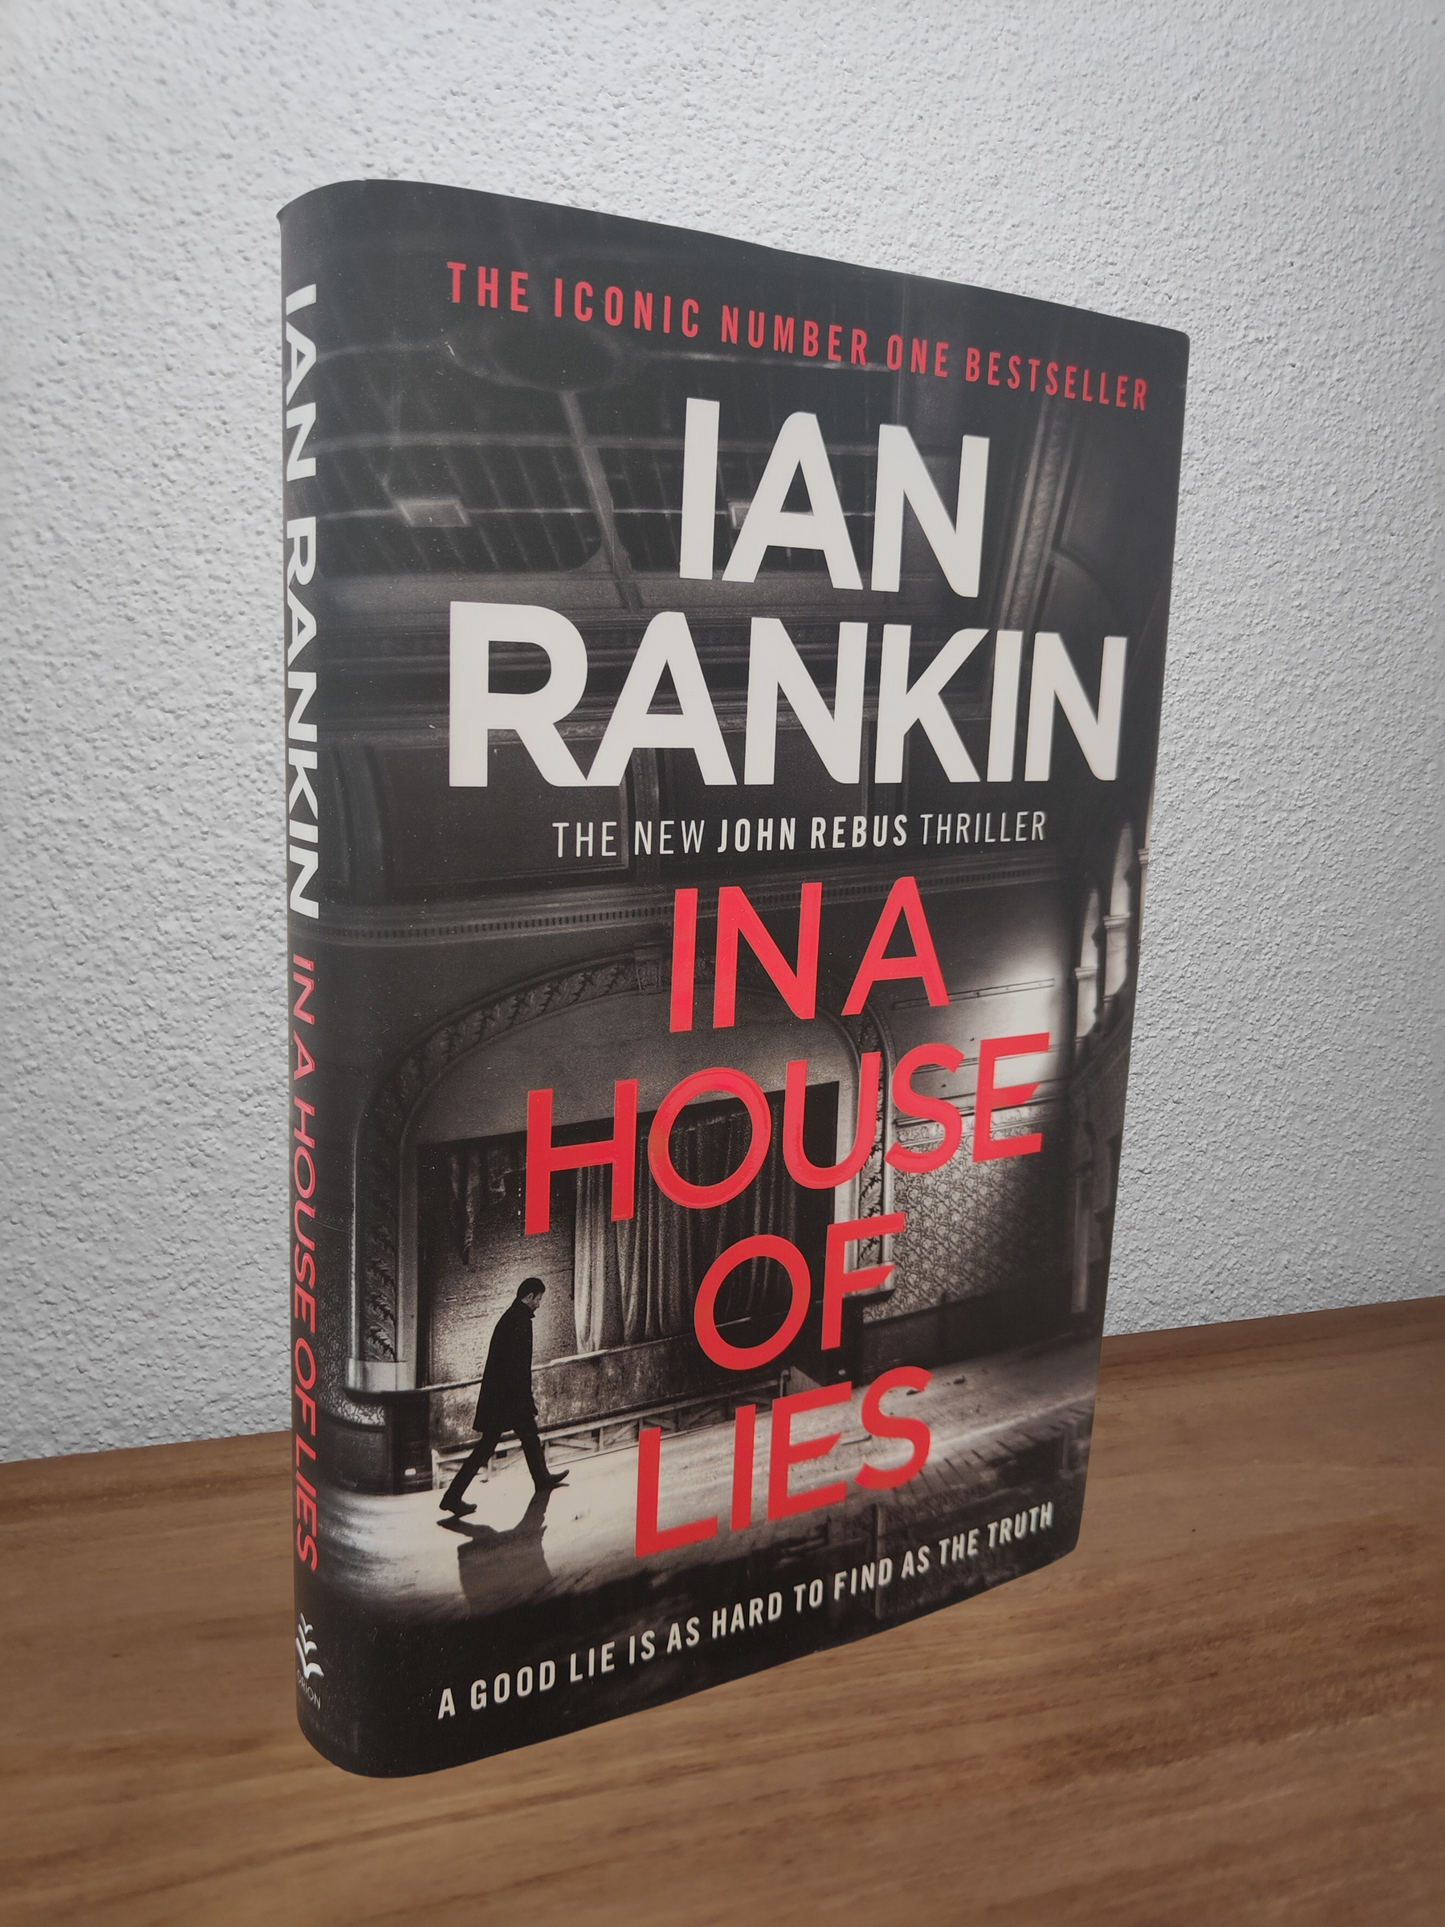 Ian Rankin - In a House of Lies (Inspector Rebus #22)